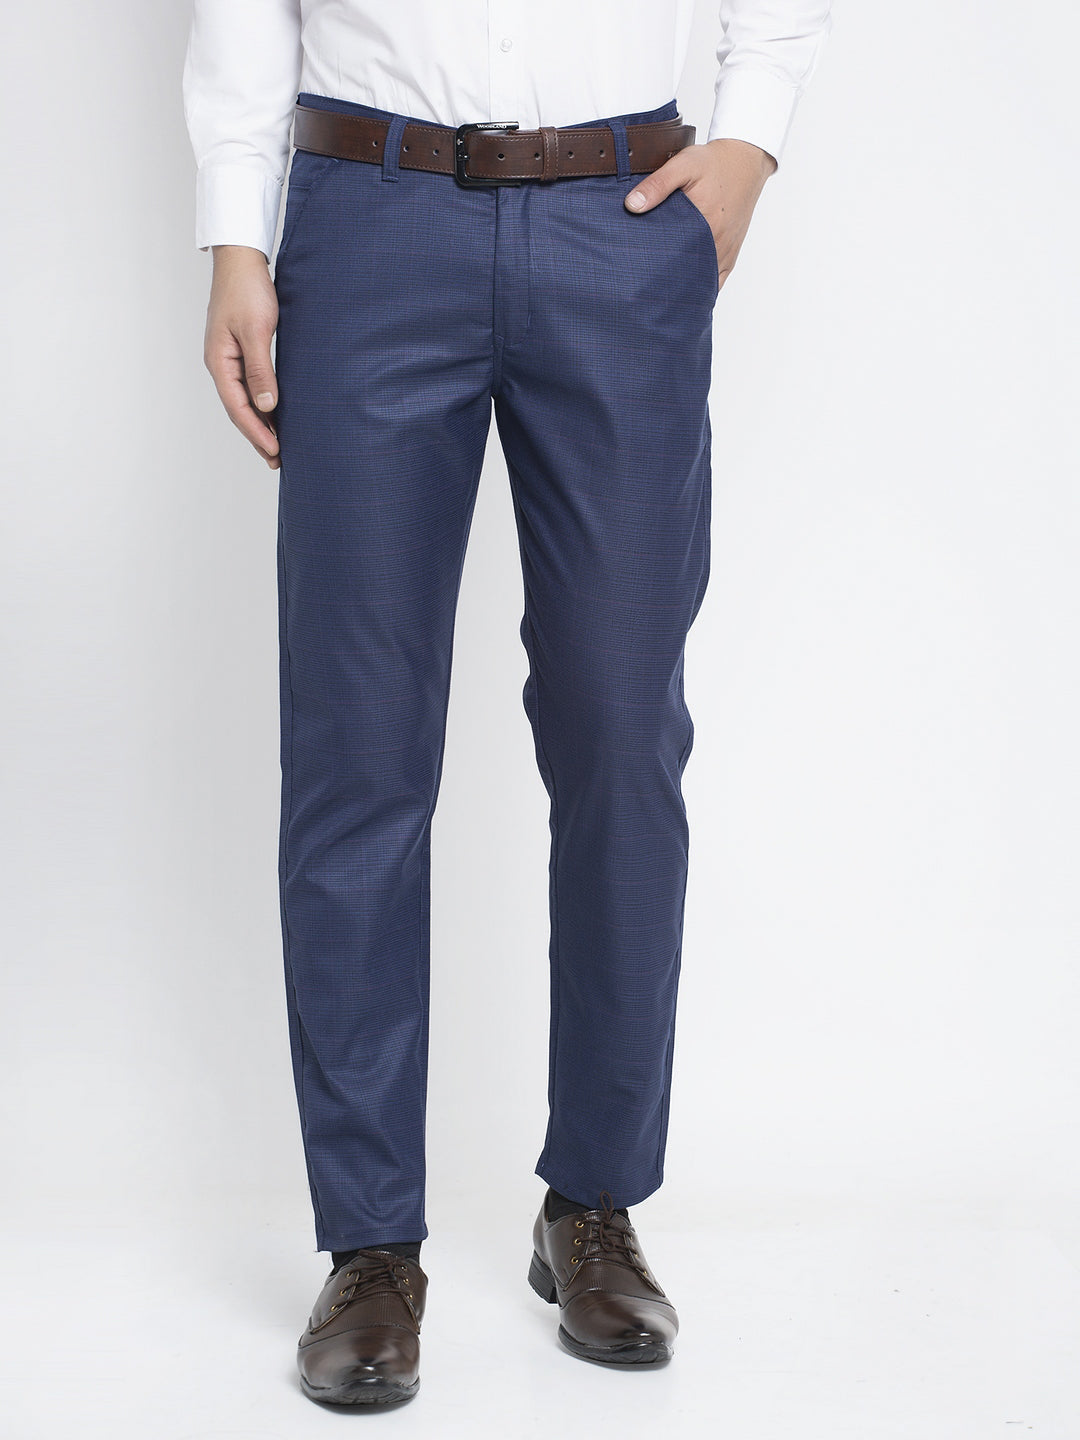 Men's Blue Formal Trousers ( FGP 262Blue ) - Jainish